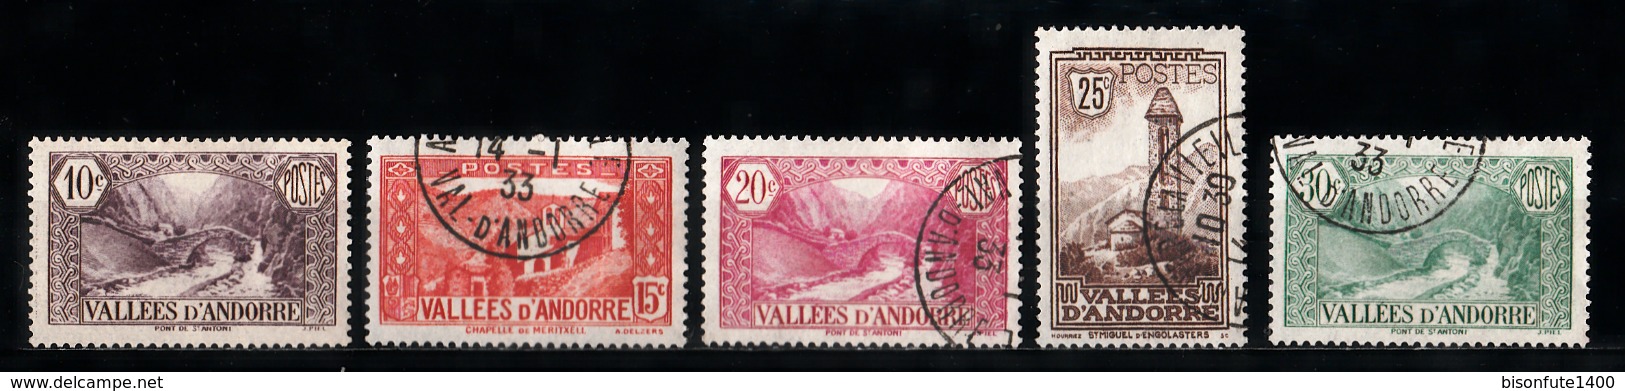 Andorre Français 1932 - 1933 : Timbres Yvert & Tellier N° 24 - 25 - 26 - 27 - 28 - 29 - 30 - 31 - 32 - 33 - 34 - 35 - .. - Usati